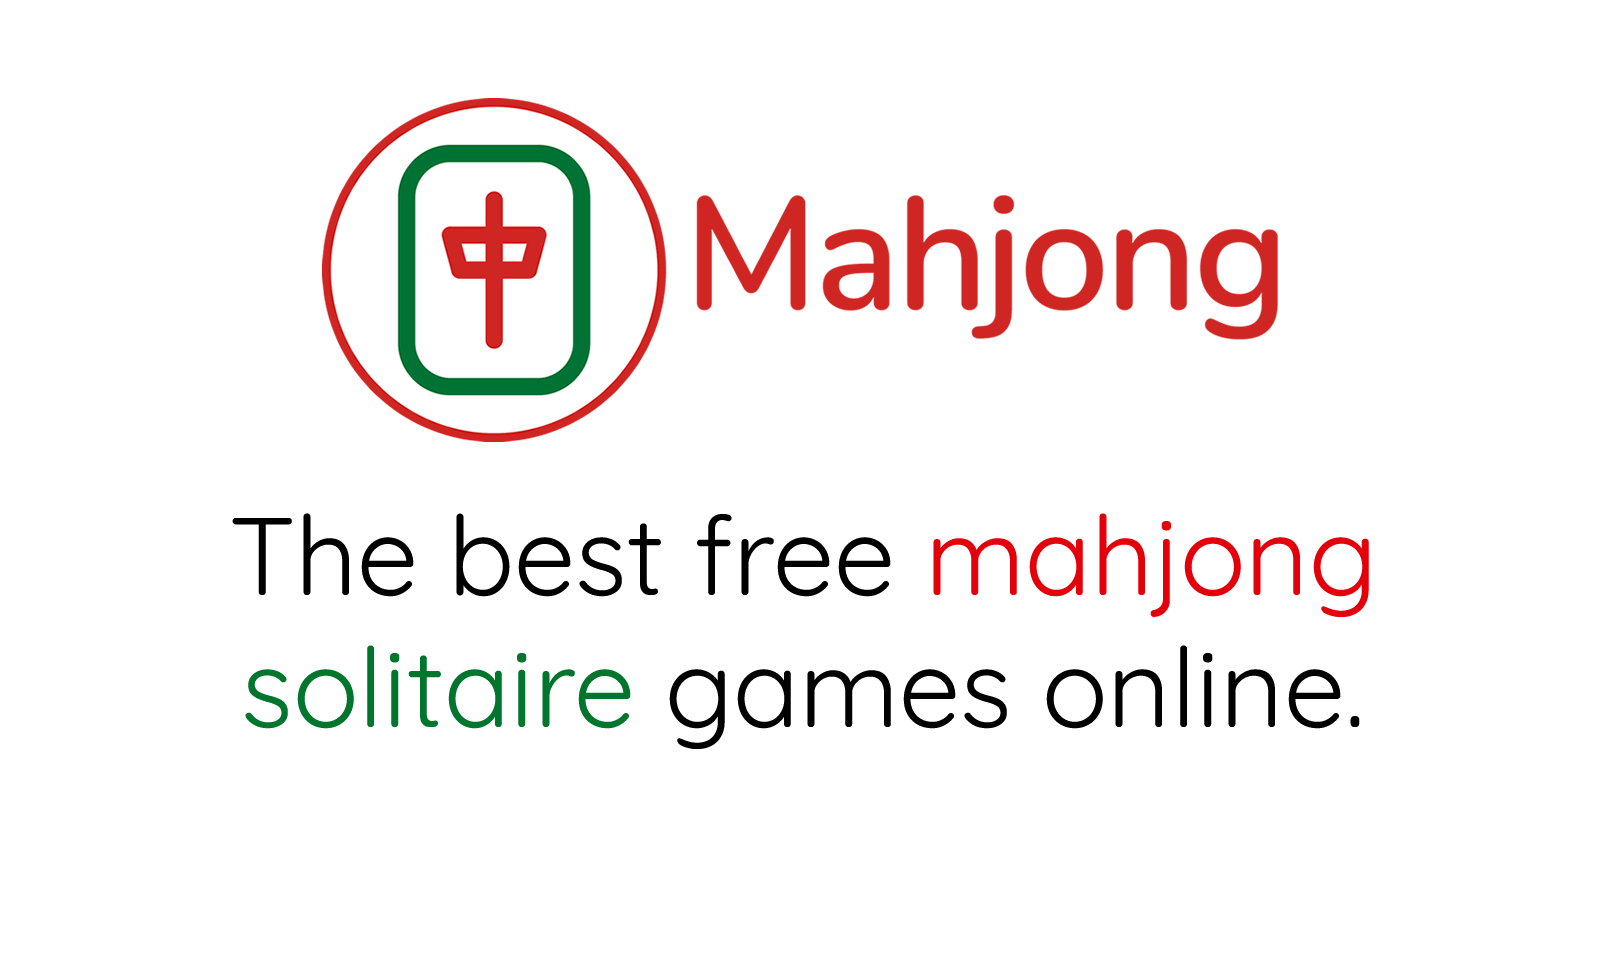 Mahjong Egipcio - Mahjong gratis pantalla completa!